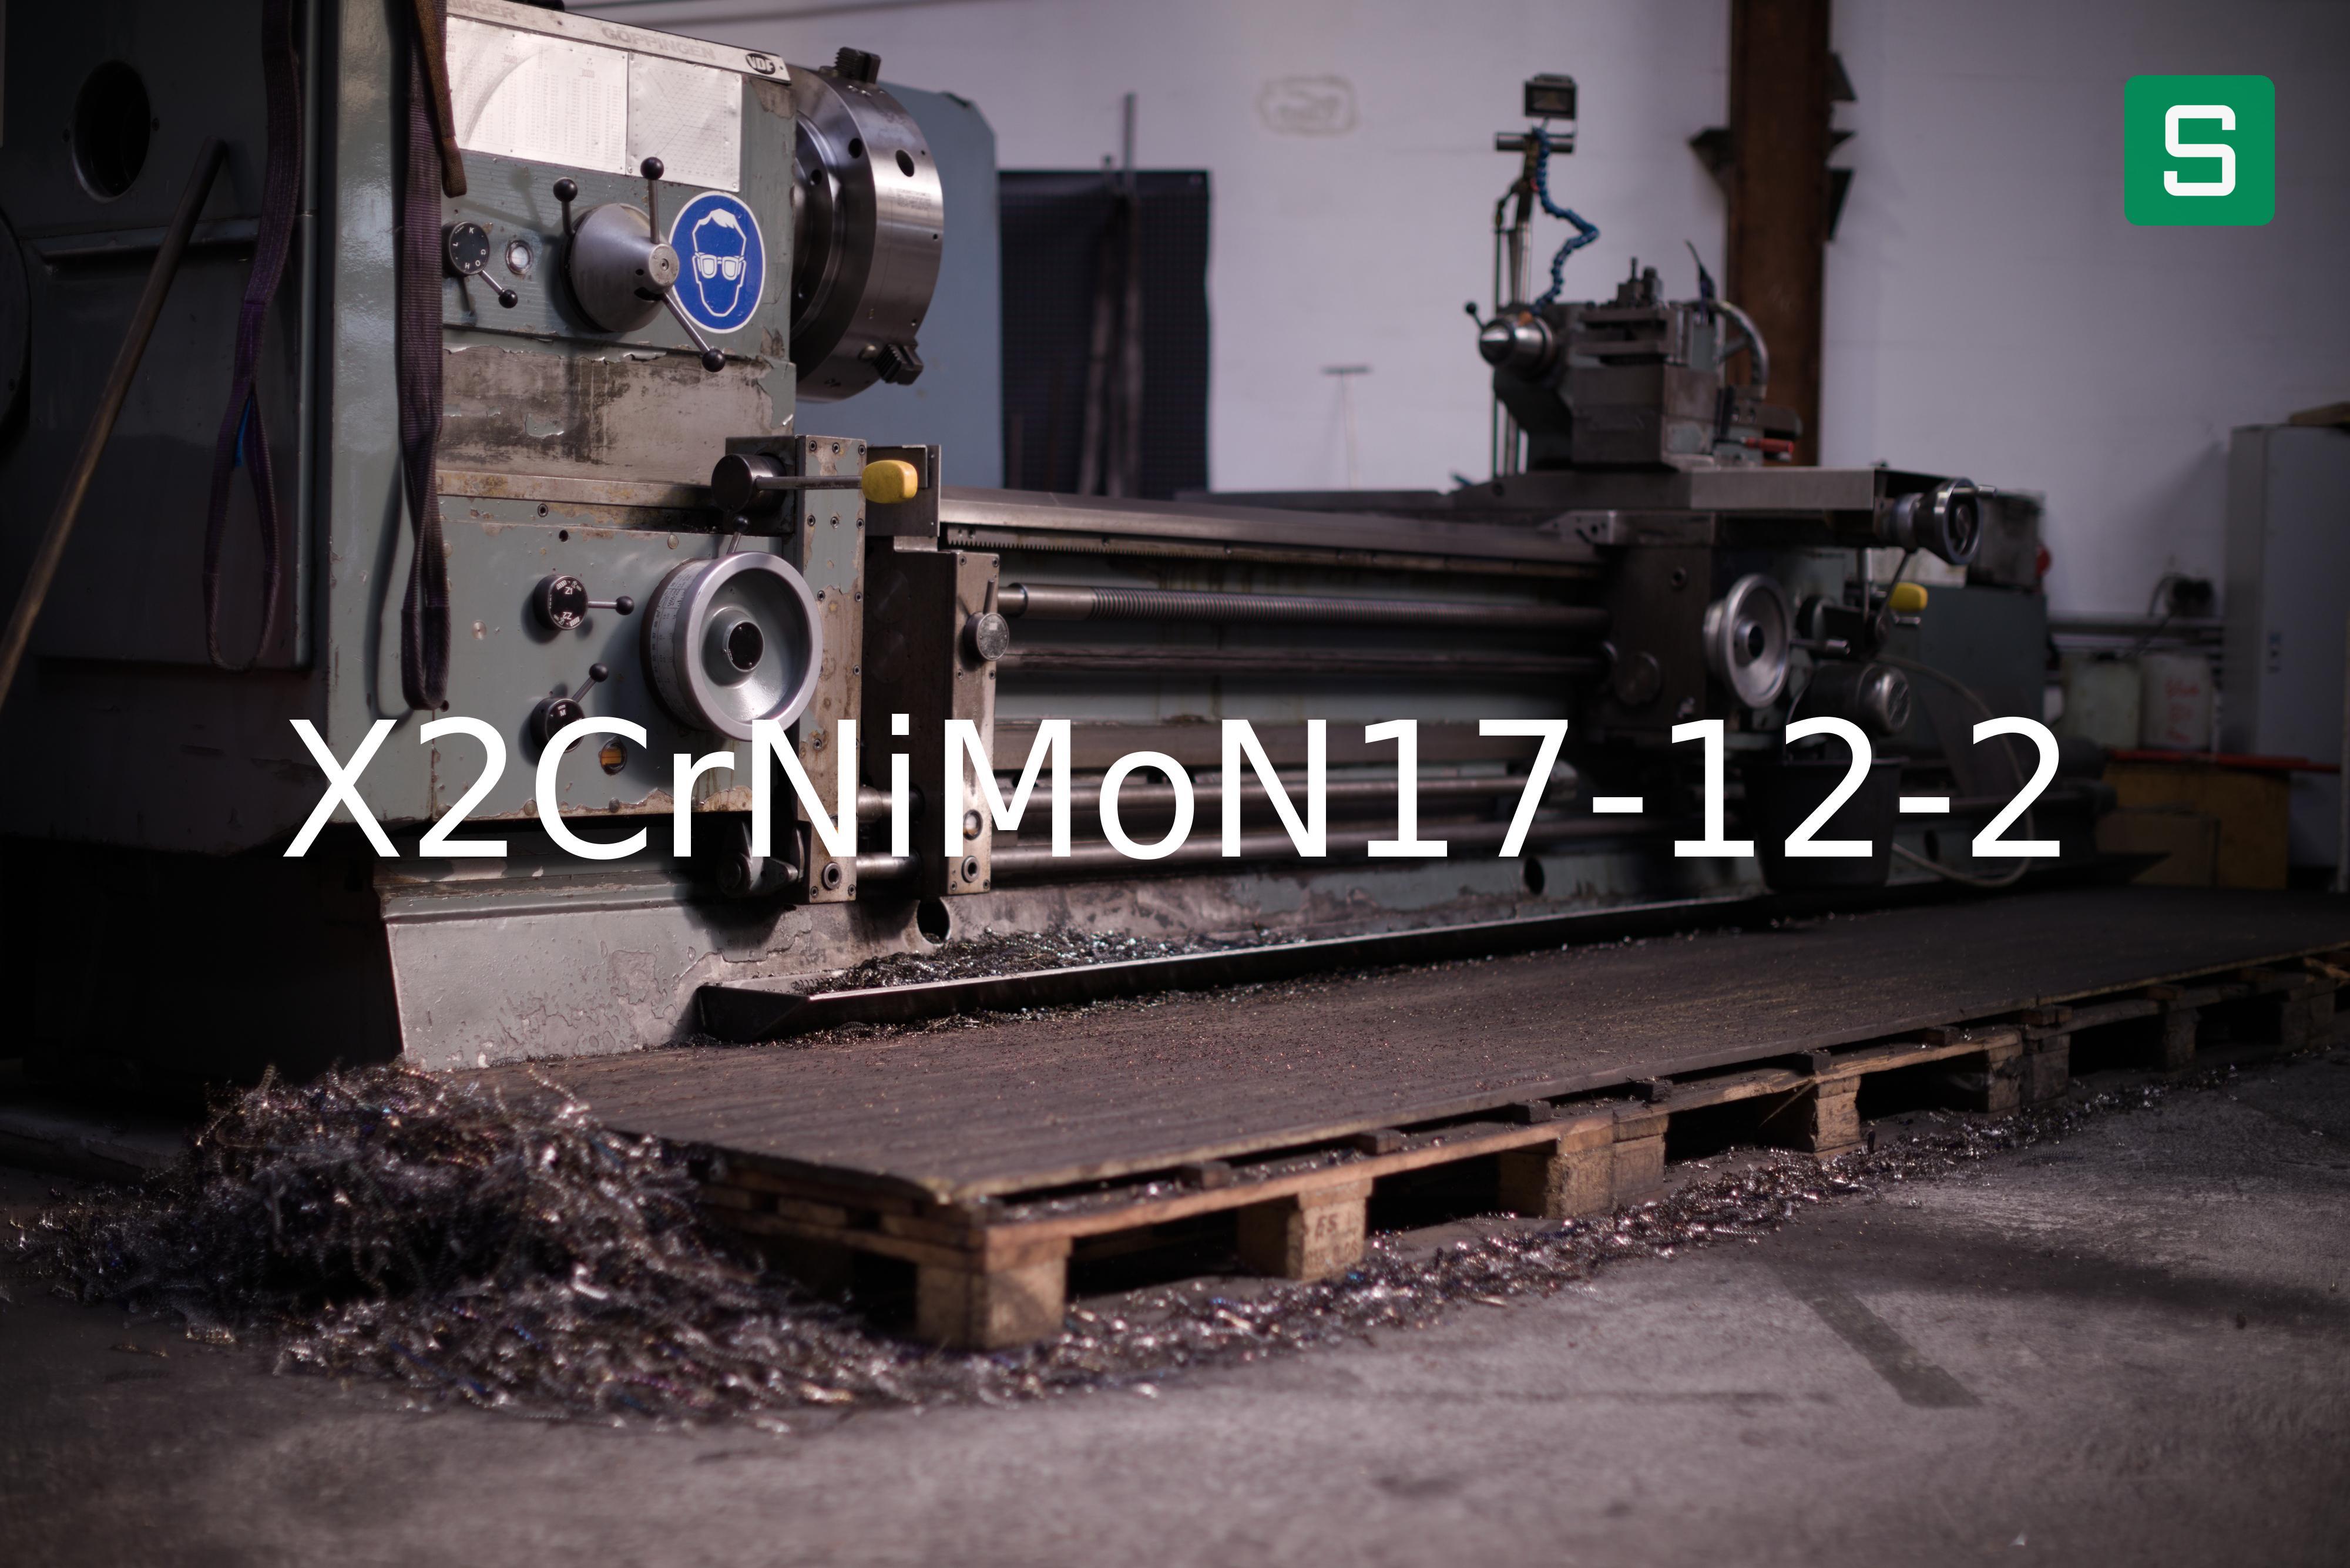 Steel Material: X2CrNiMoN17-12-2